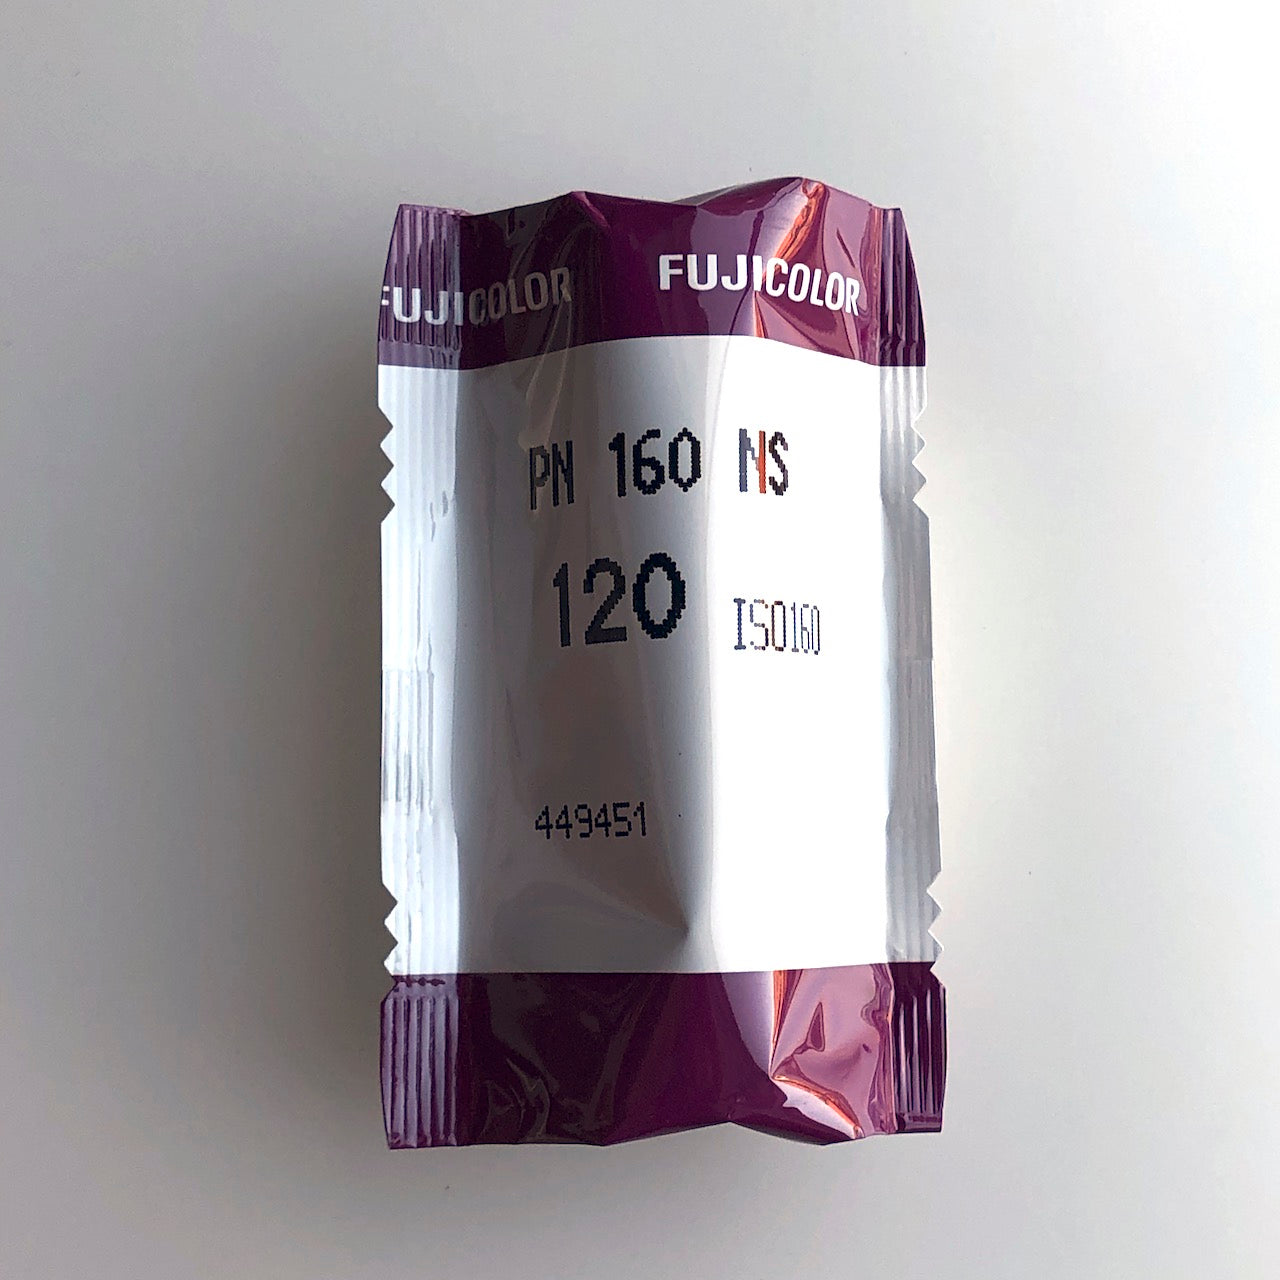 Fujicolor Pro160 NS 120 (expired December 2021)